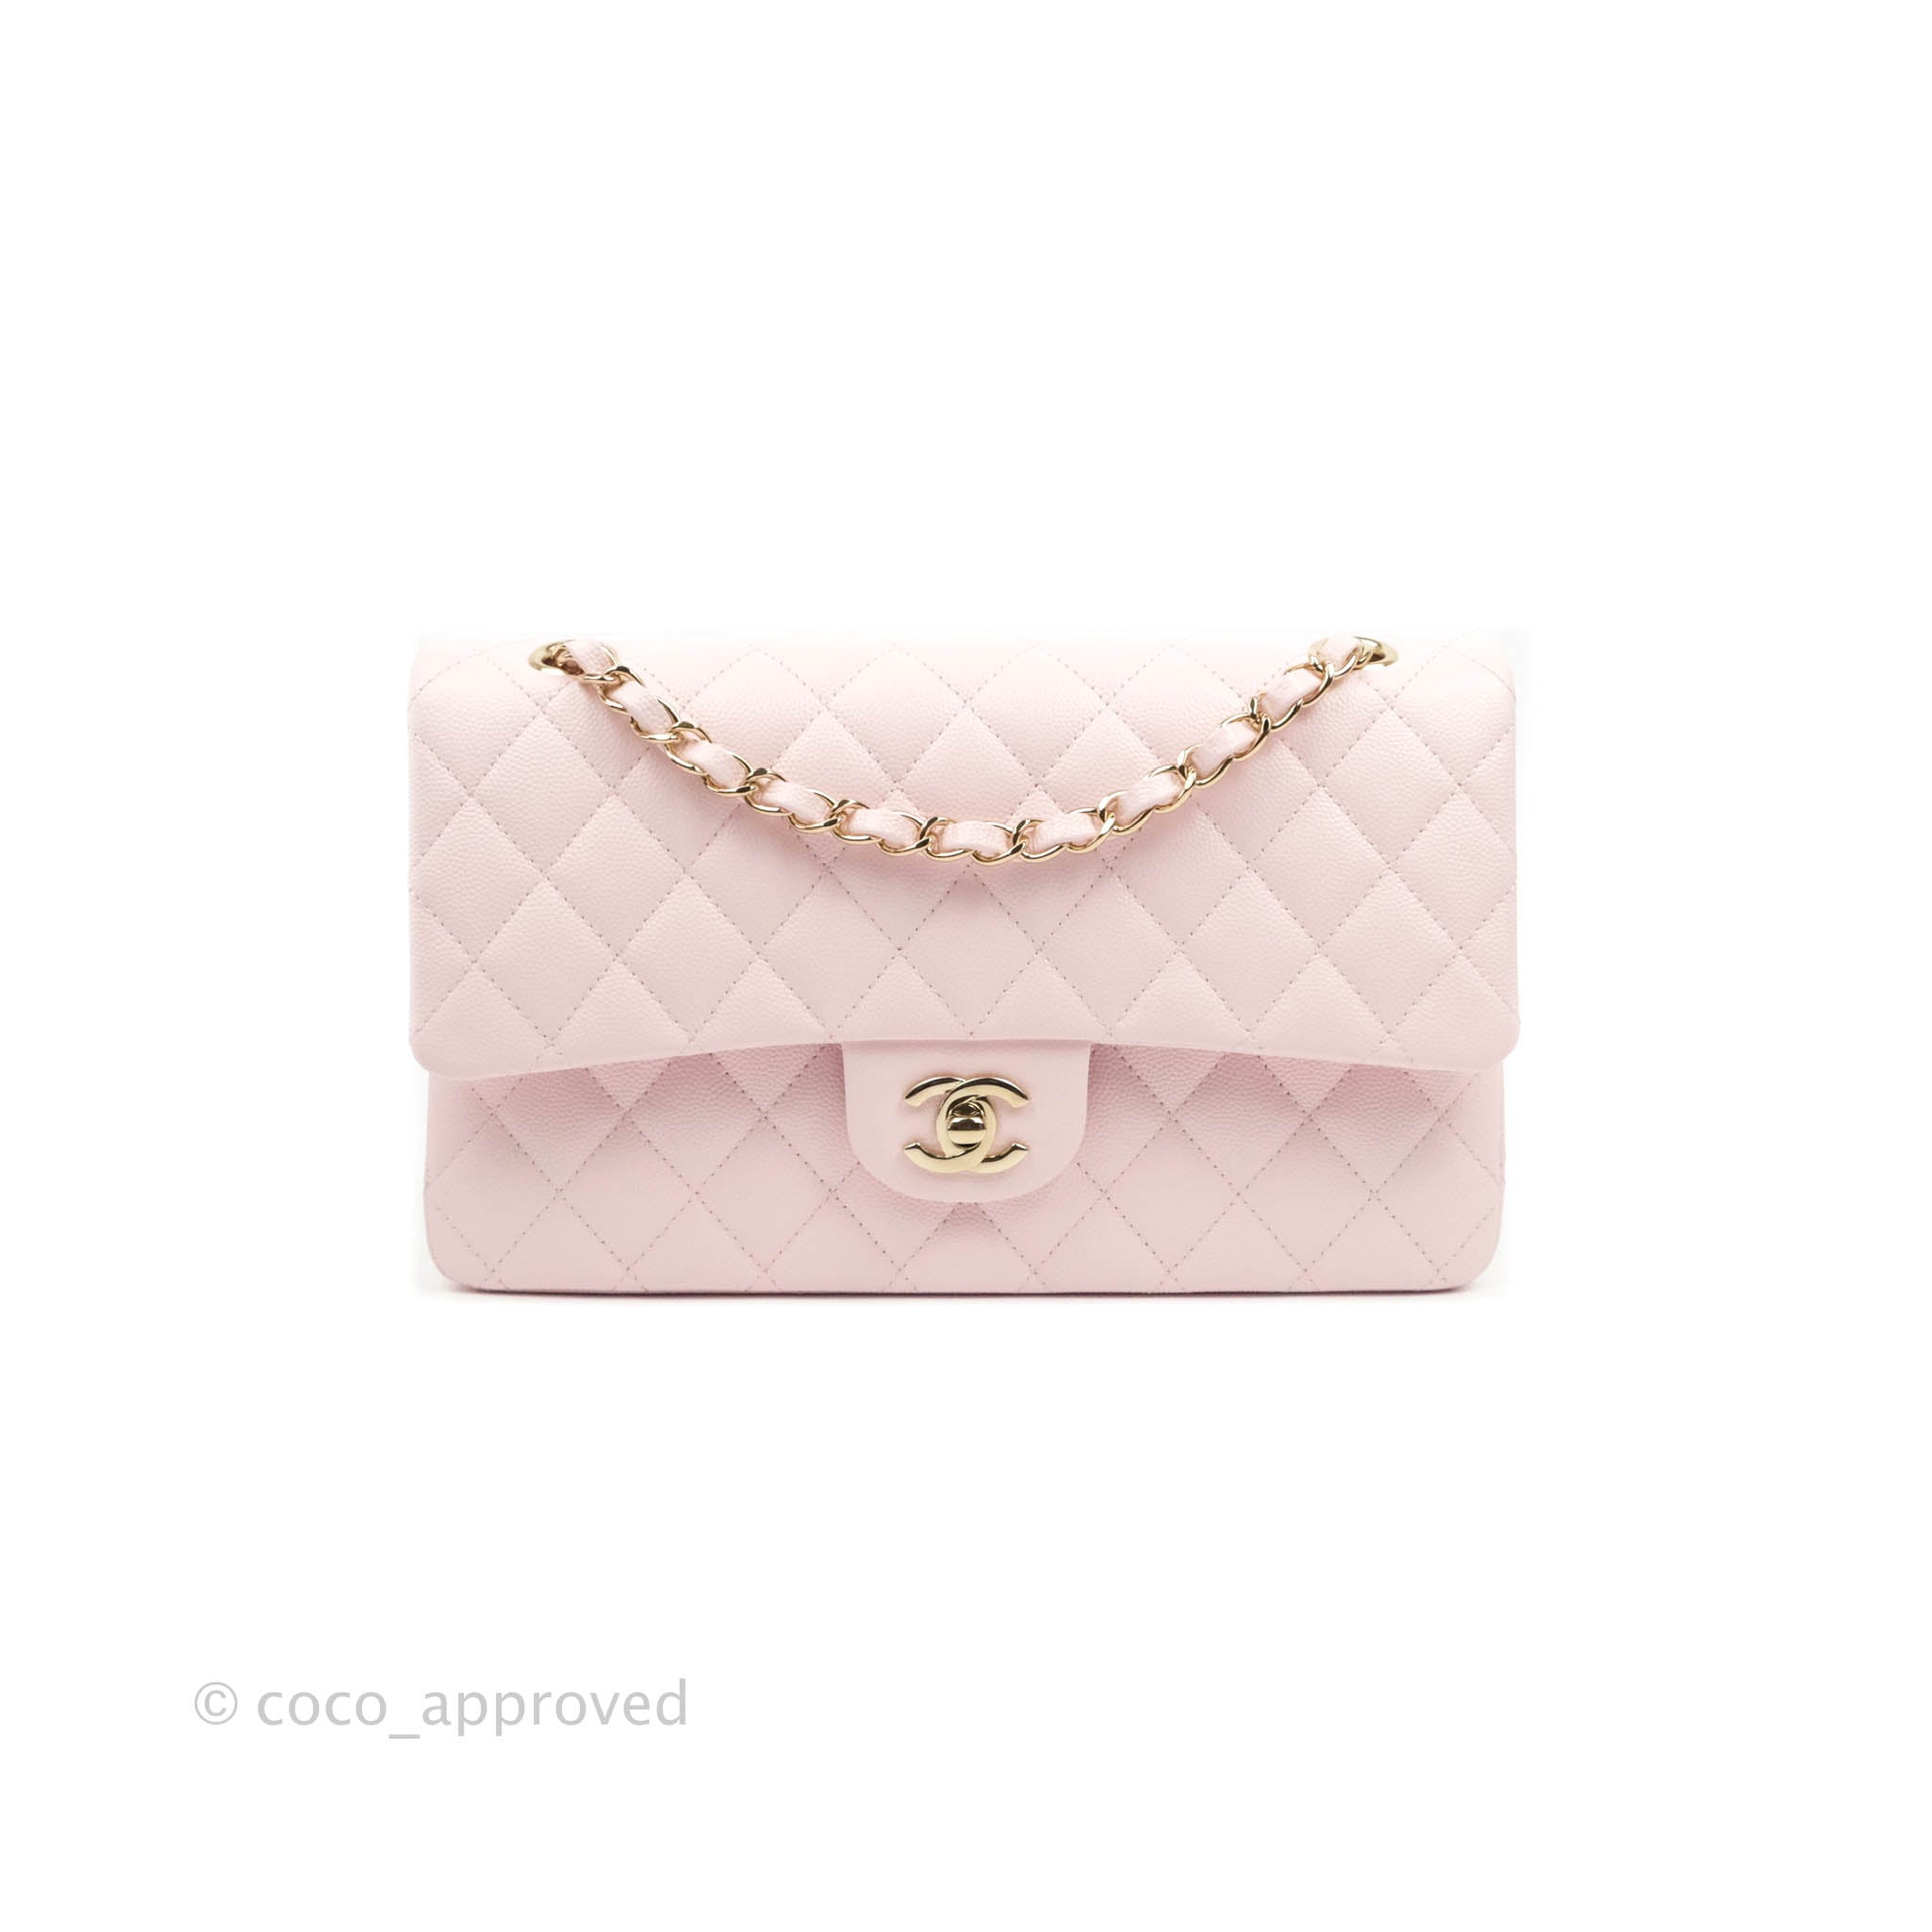 light pink chanel purse